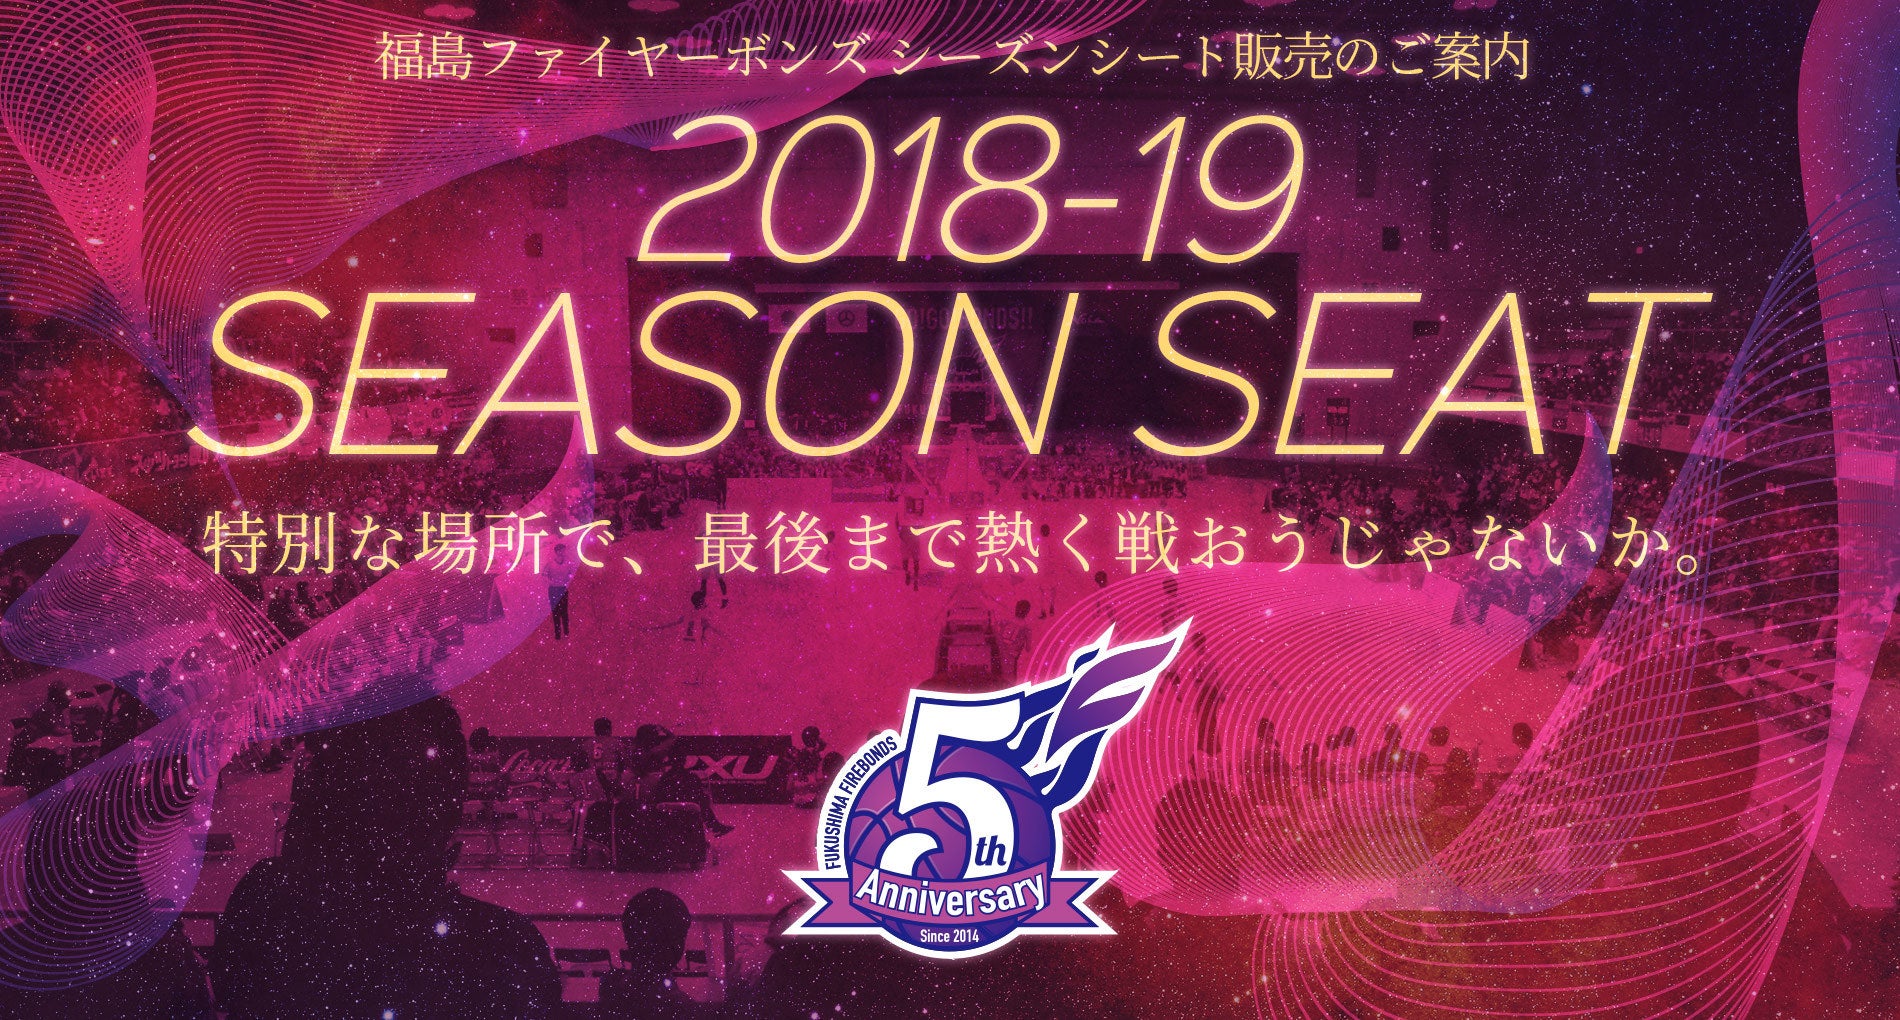 2018-19-seasonseat-pr3.jpg